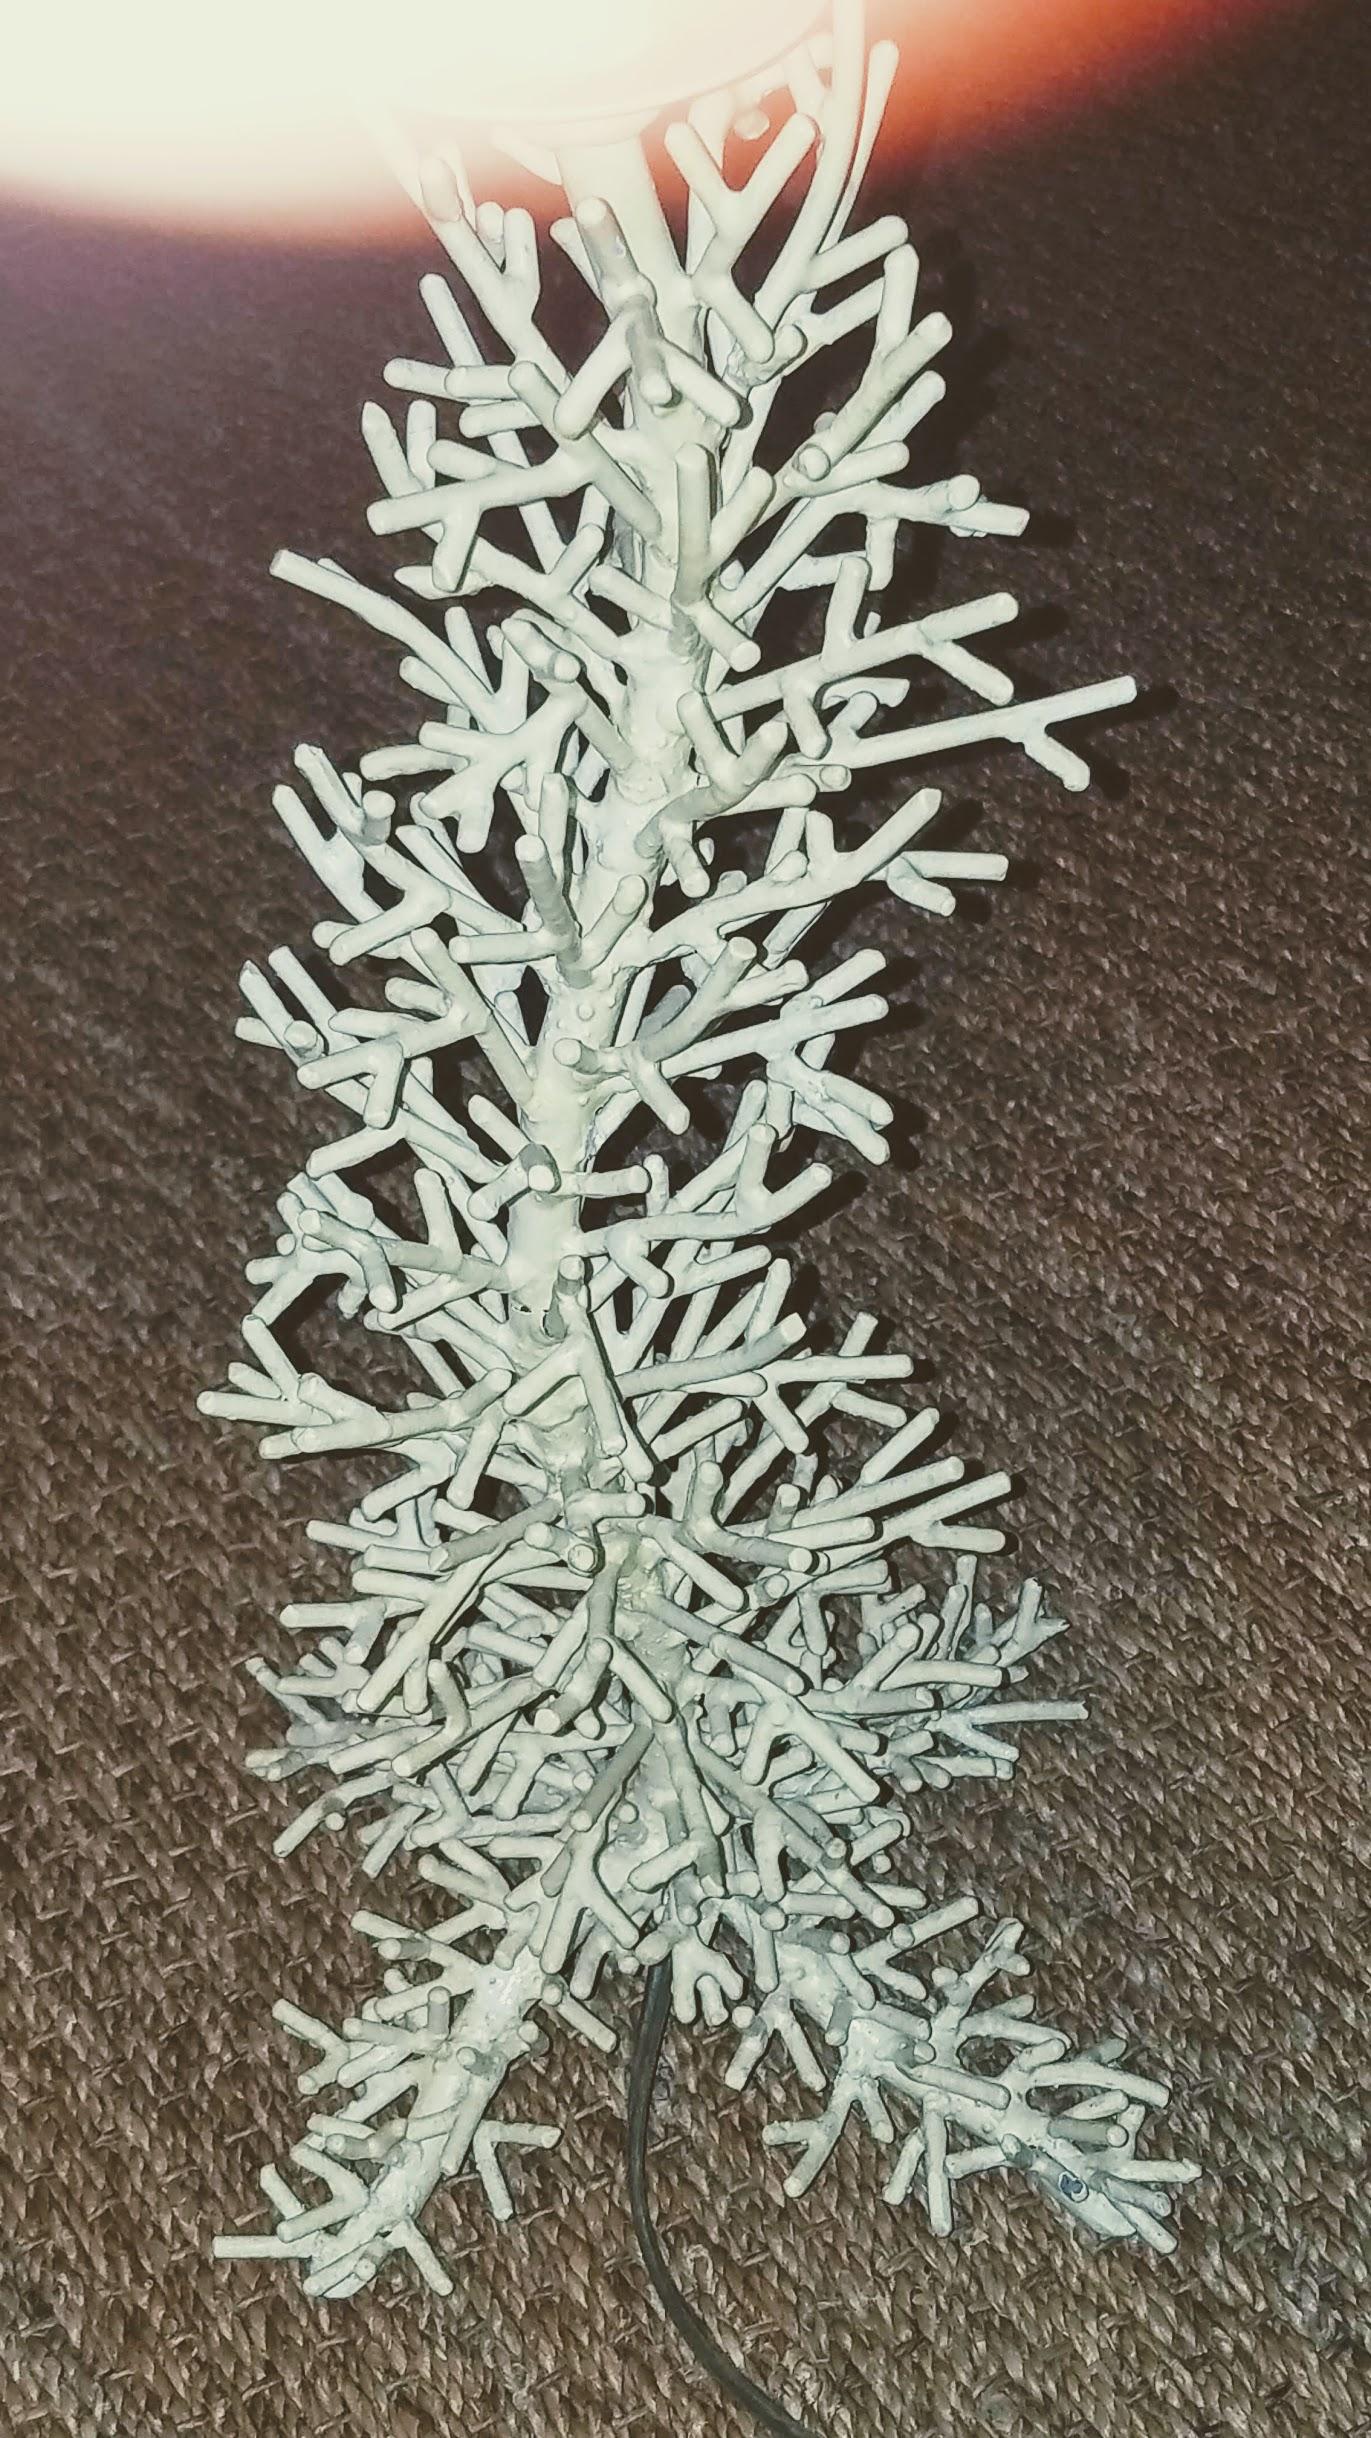 Cast metal Porcupine coral table lamp, 1980s.
